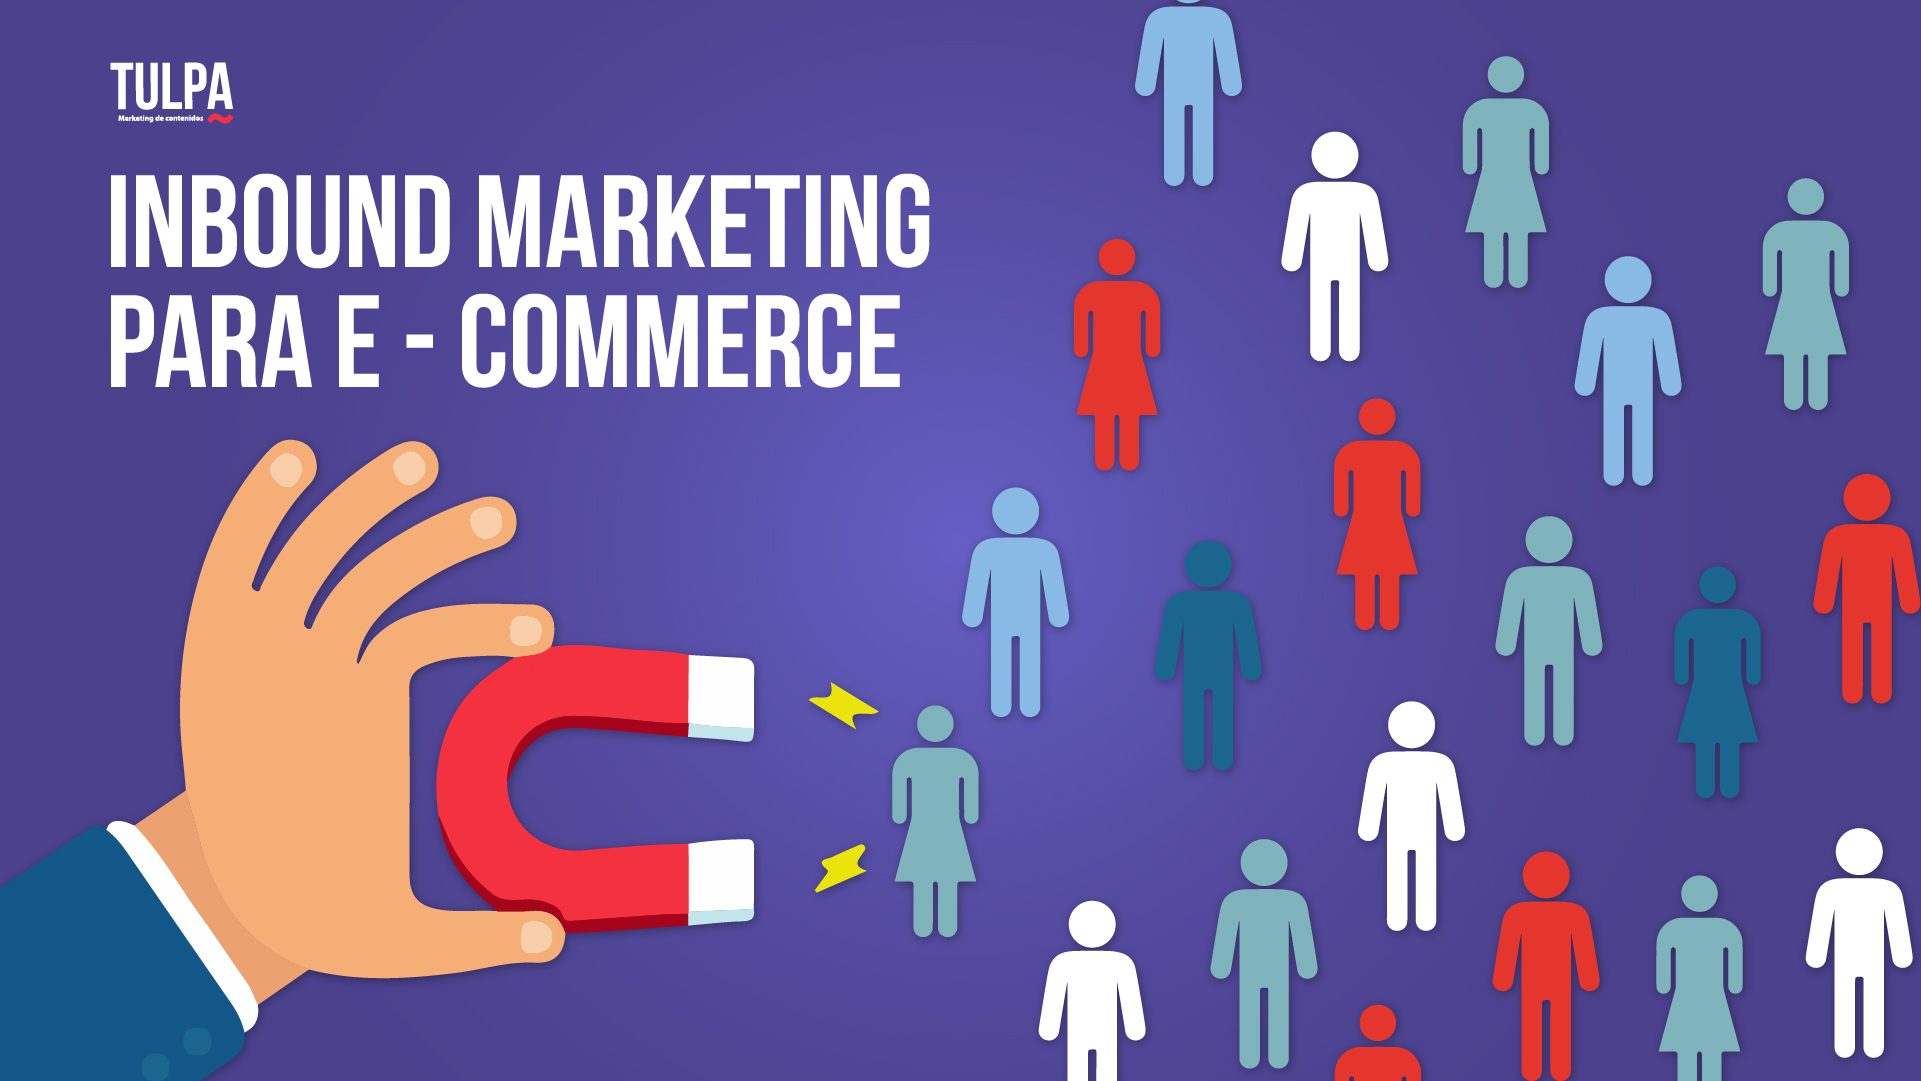 Inbound Marketing para E - Commerce